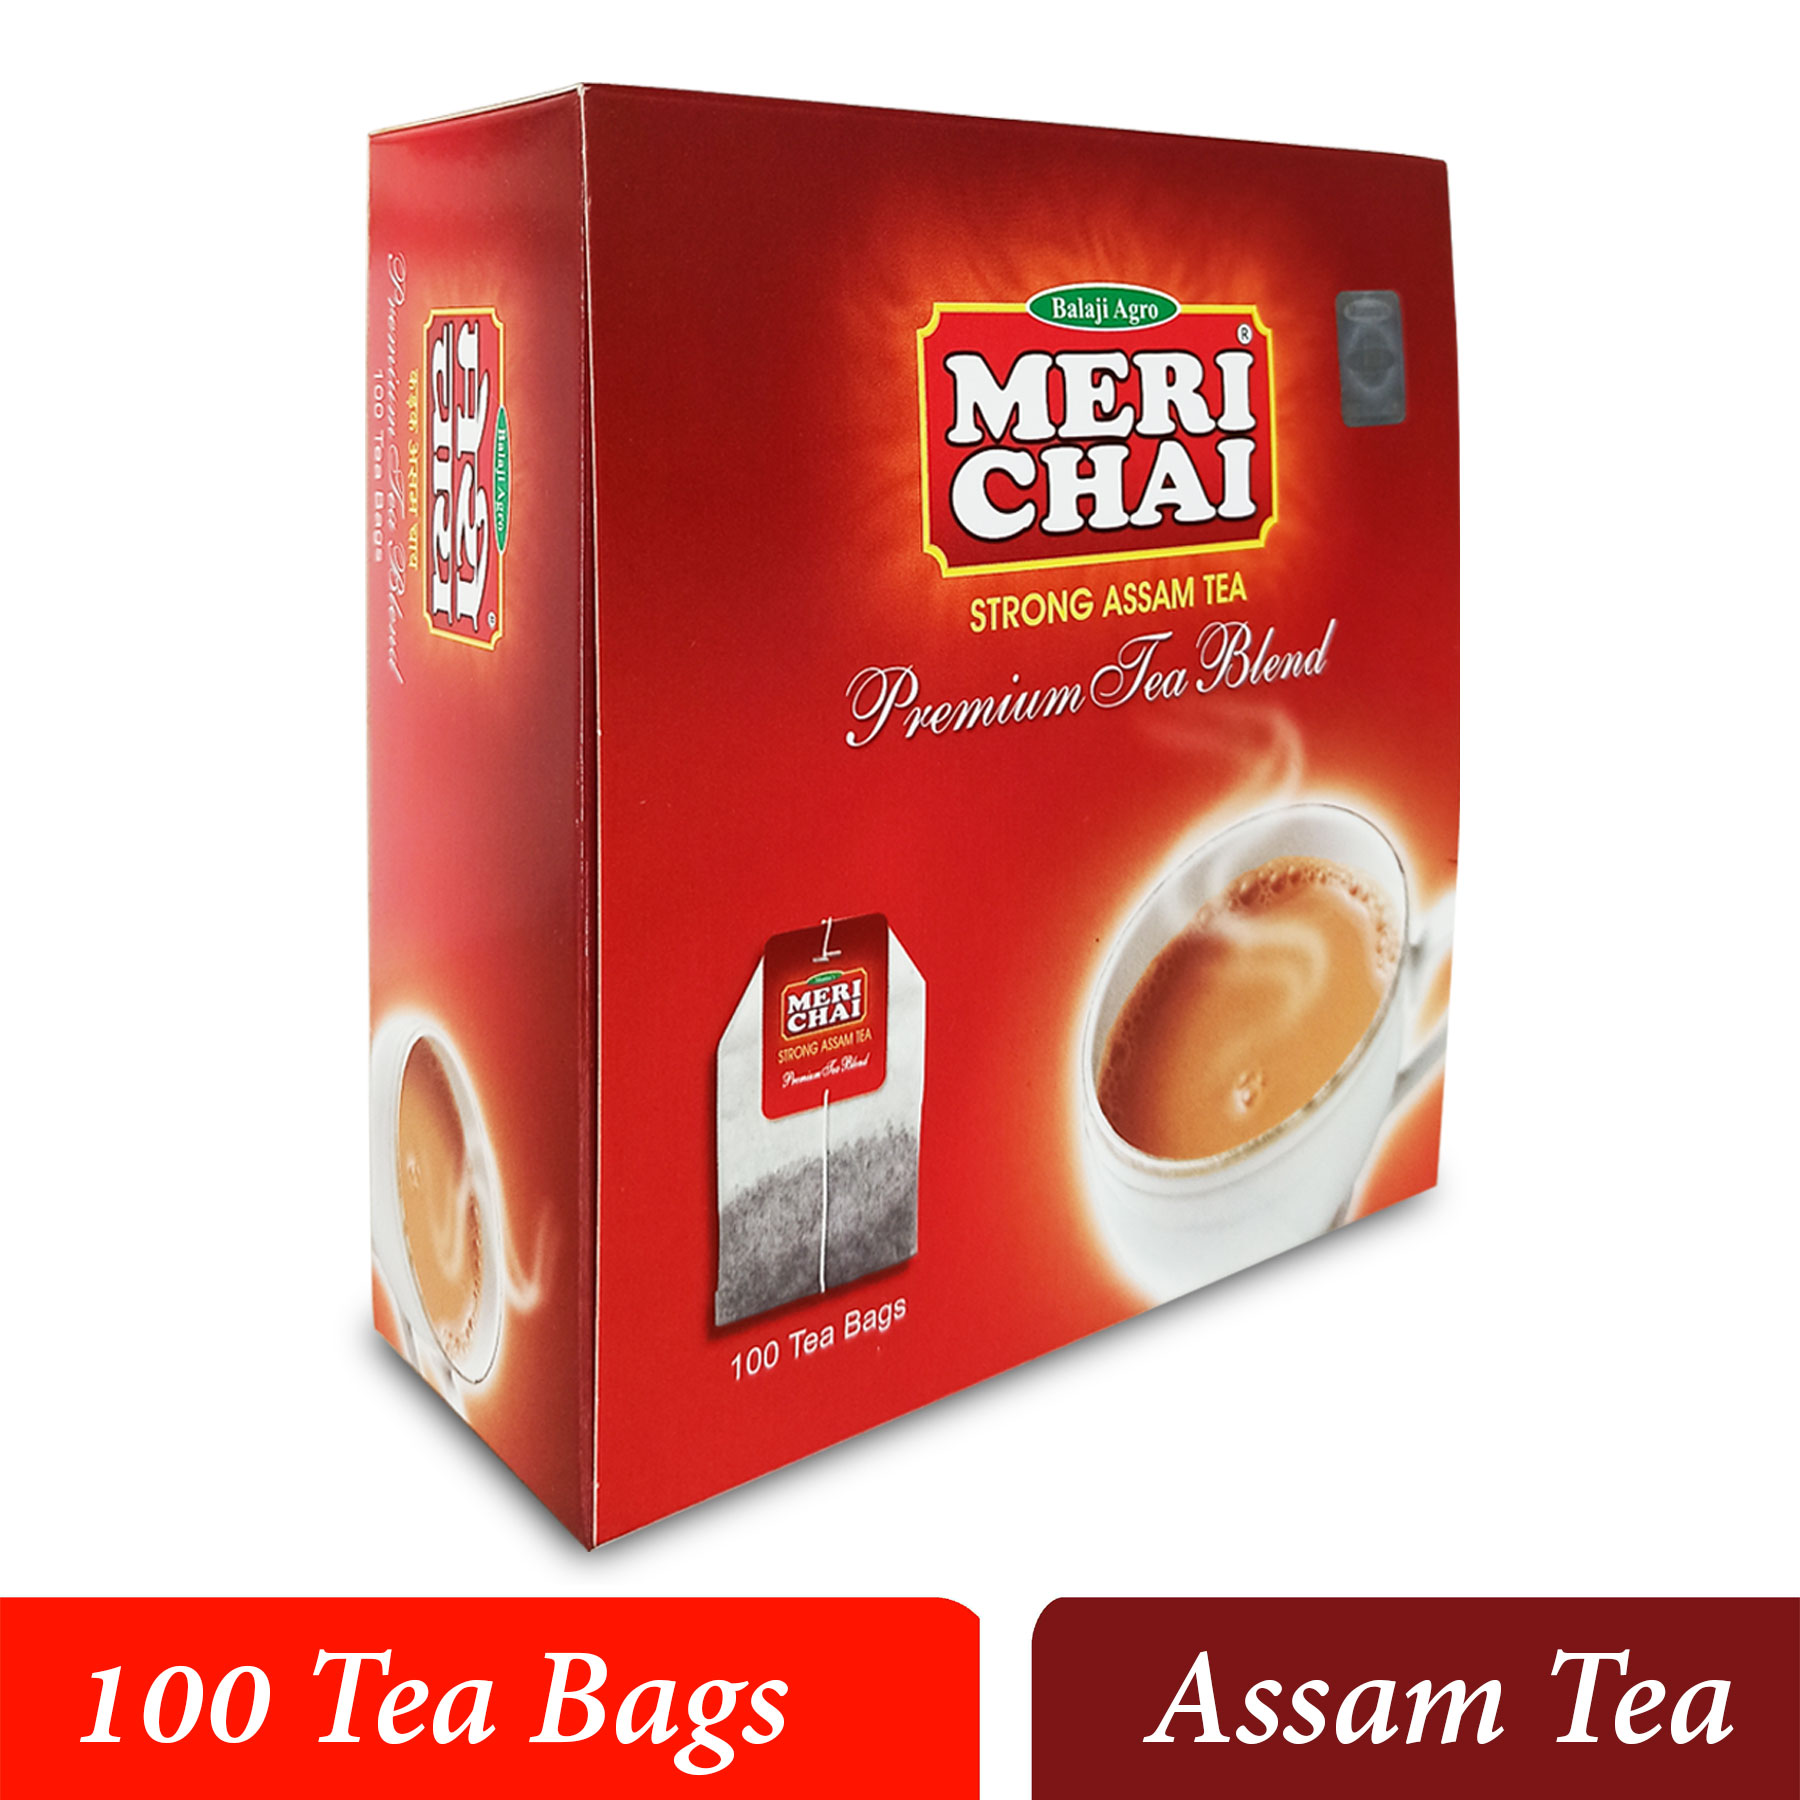 MERI CHAI STRONG ASSAM TEA PREMIUM TEA BLEND 100 TEA BAGS (1.00UNIT)